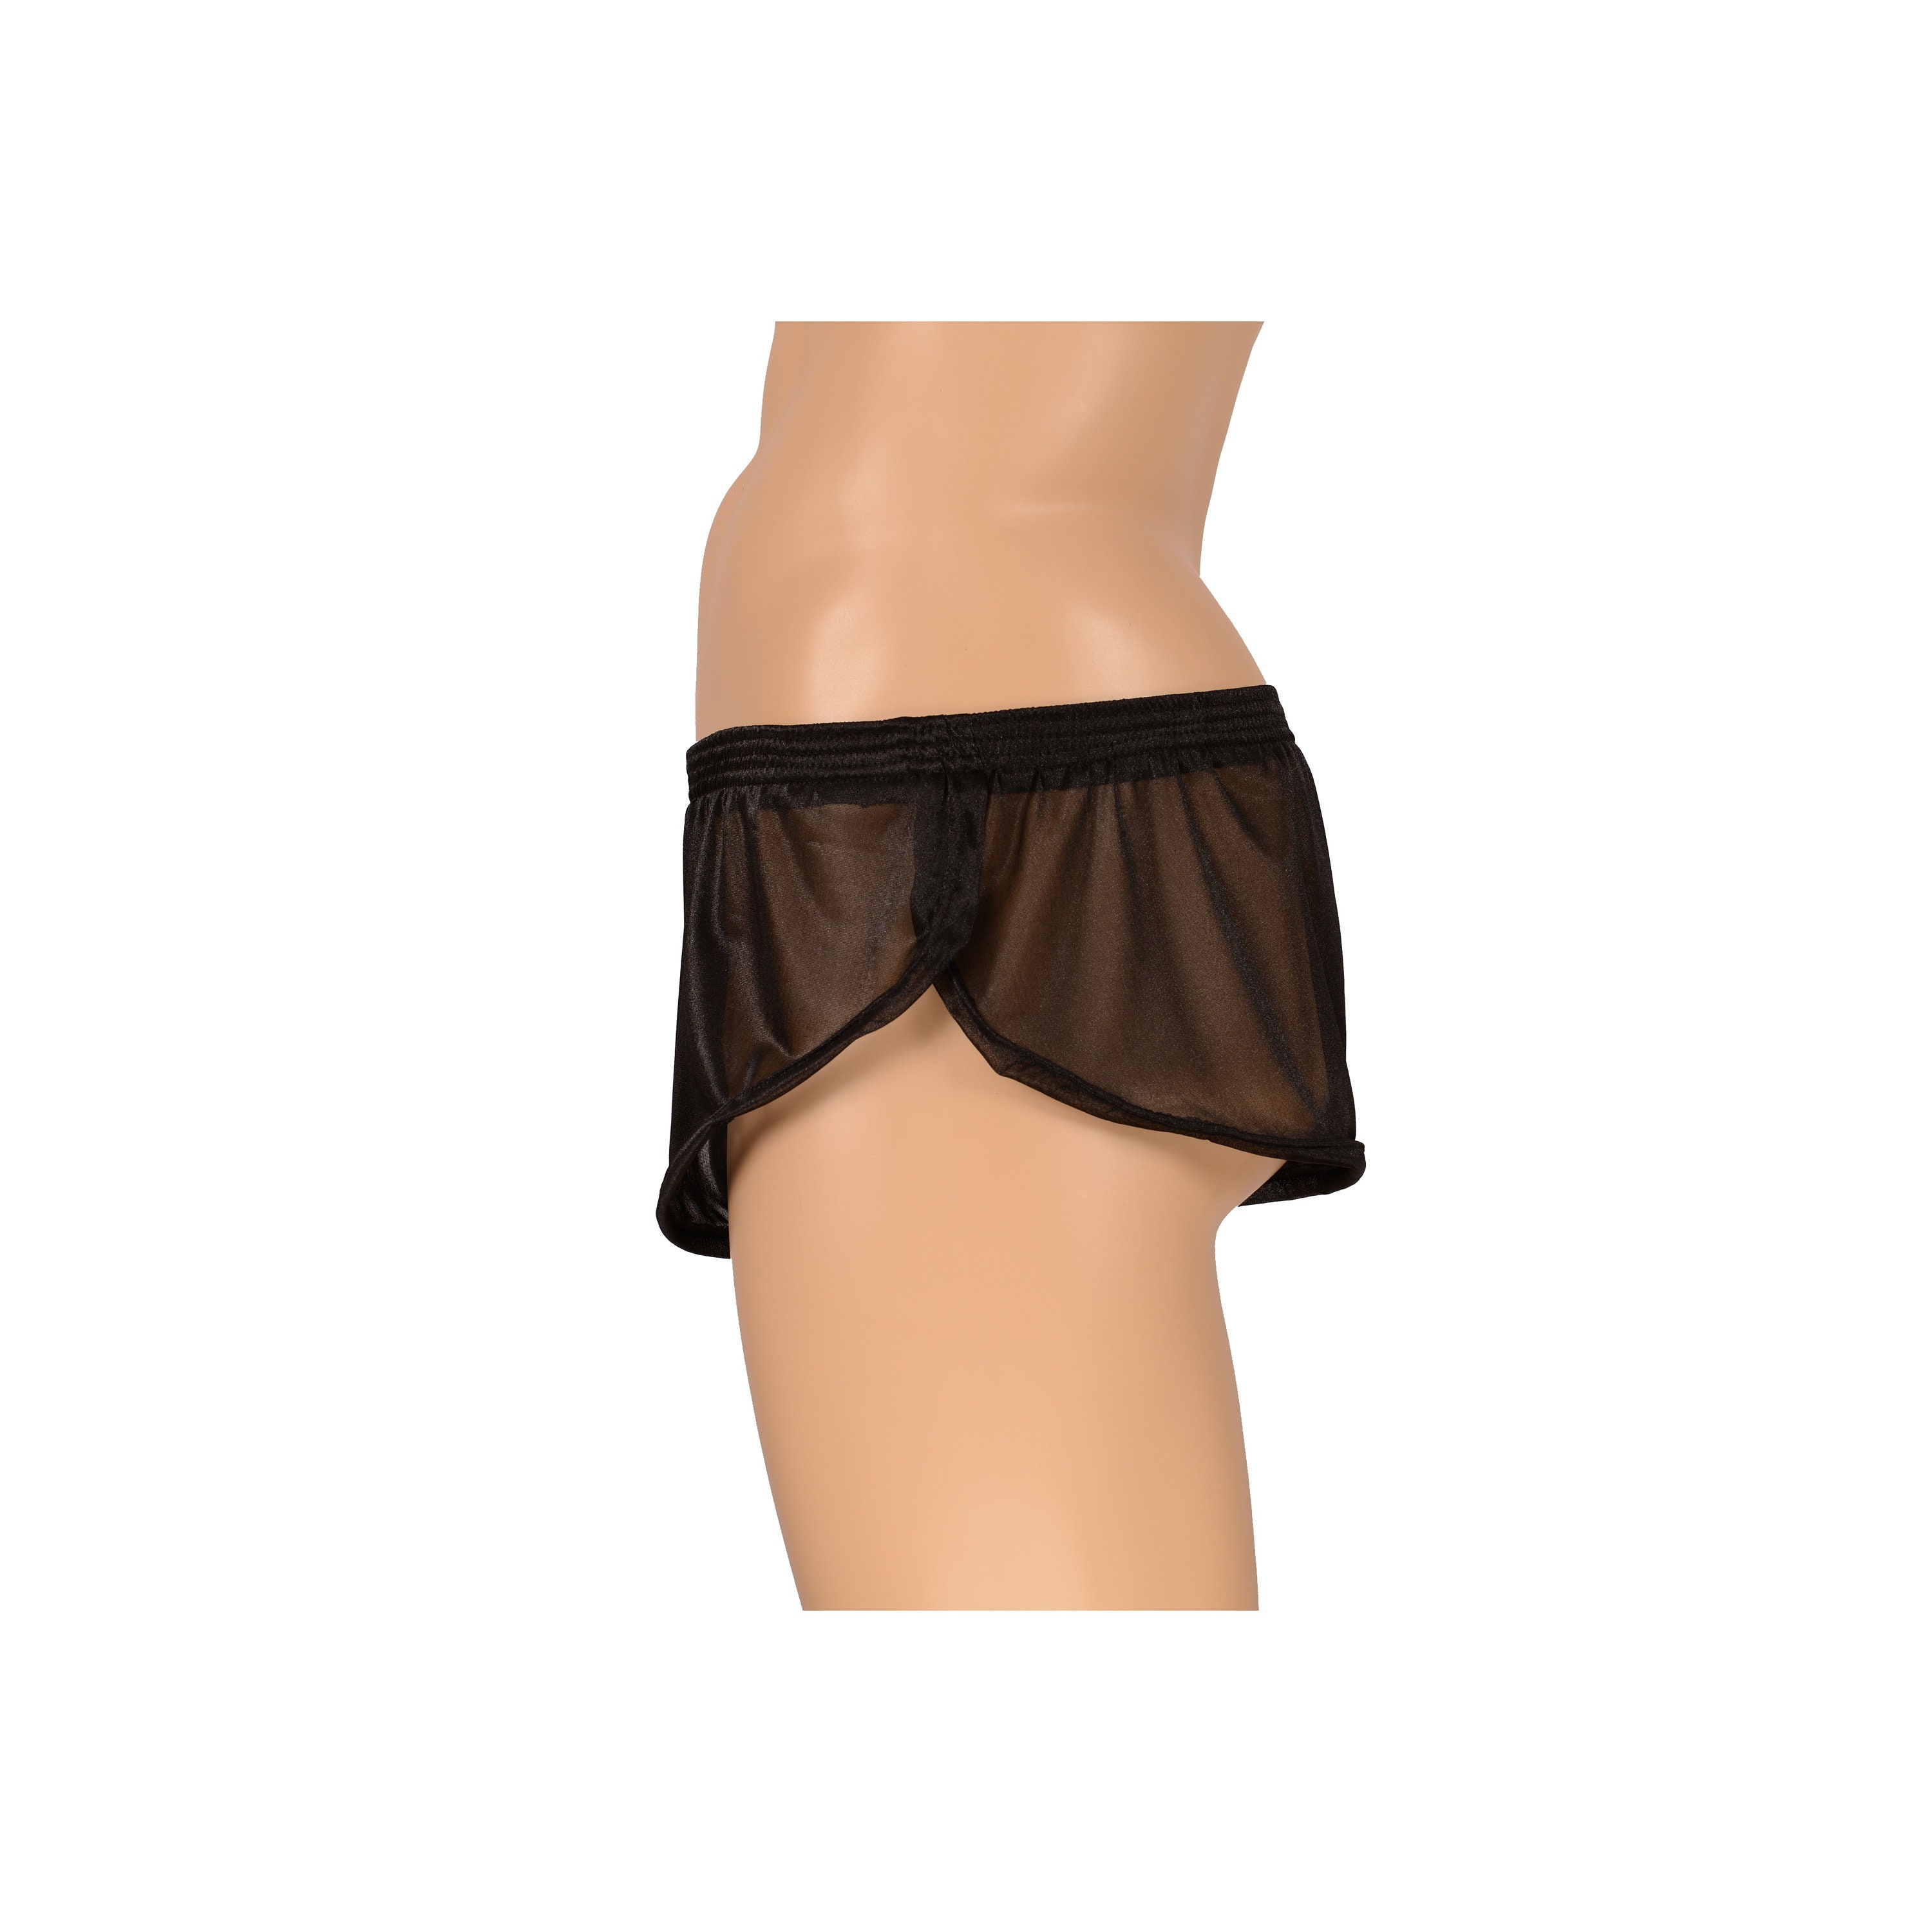 MANCYFIT Slip Shorts for Under Dresses Women Mesh Sheer Shorts See